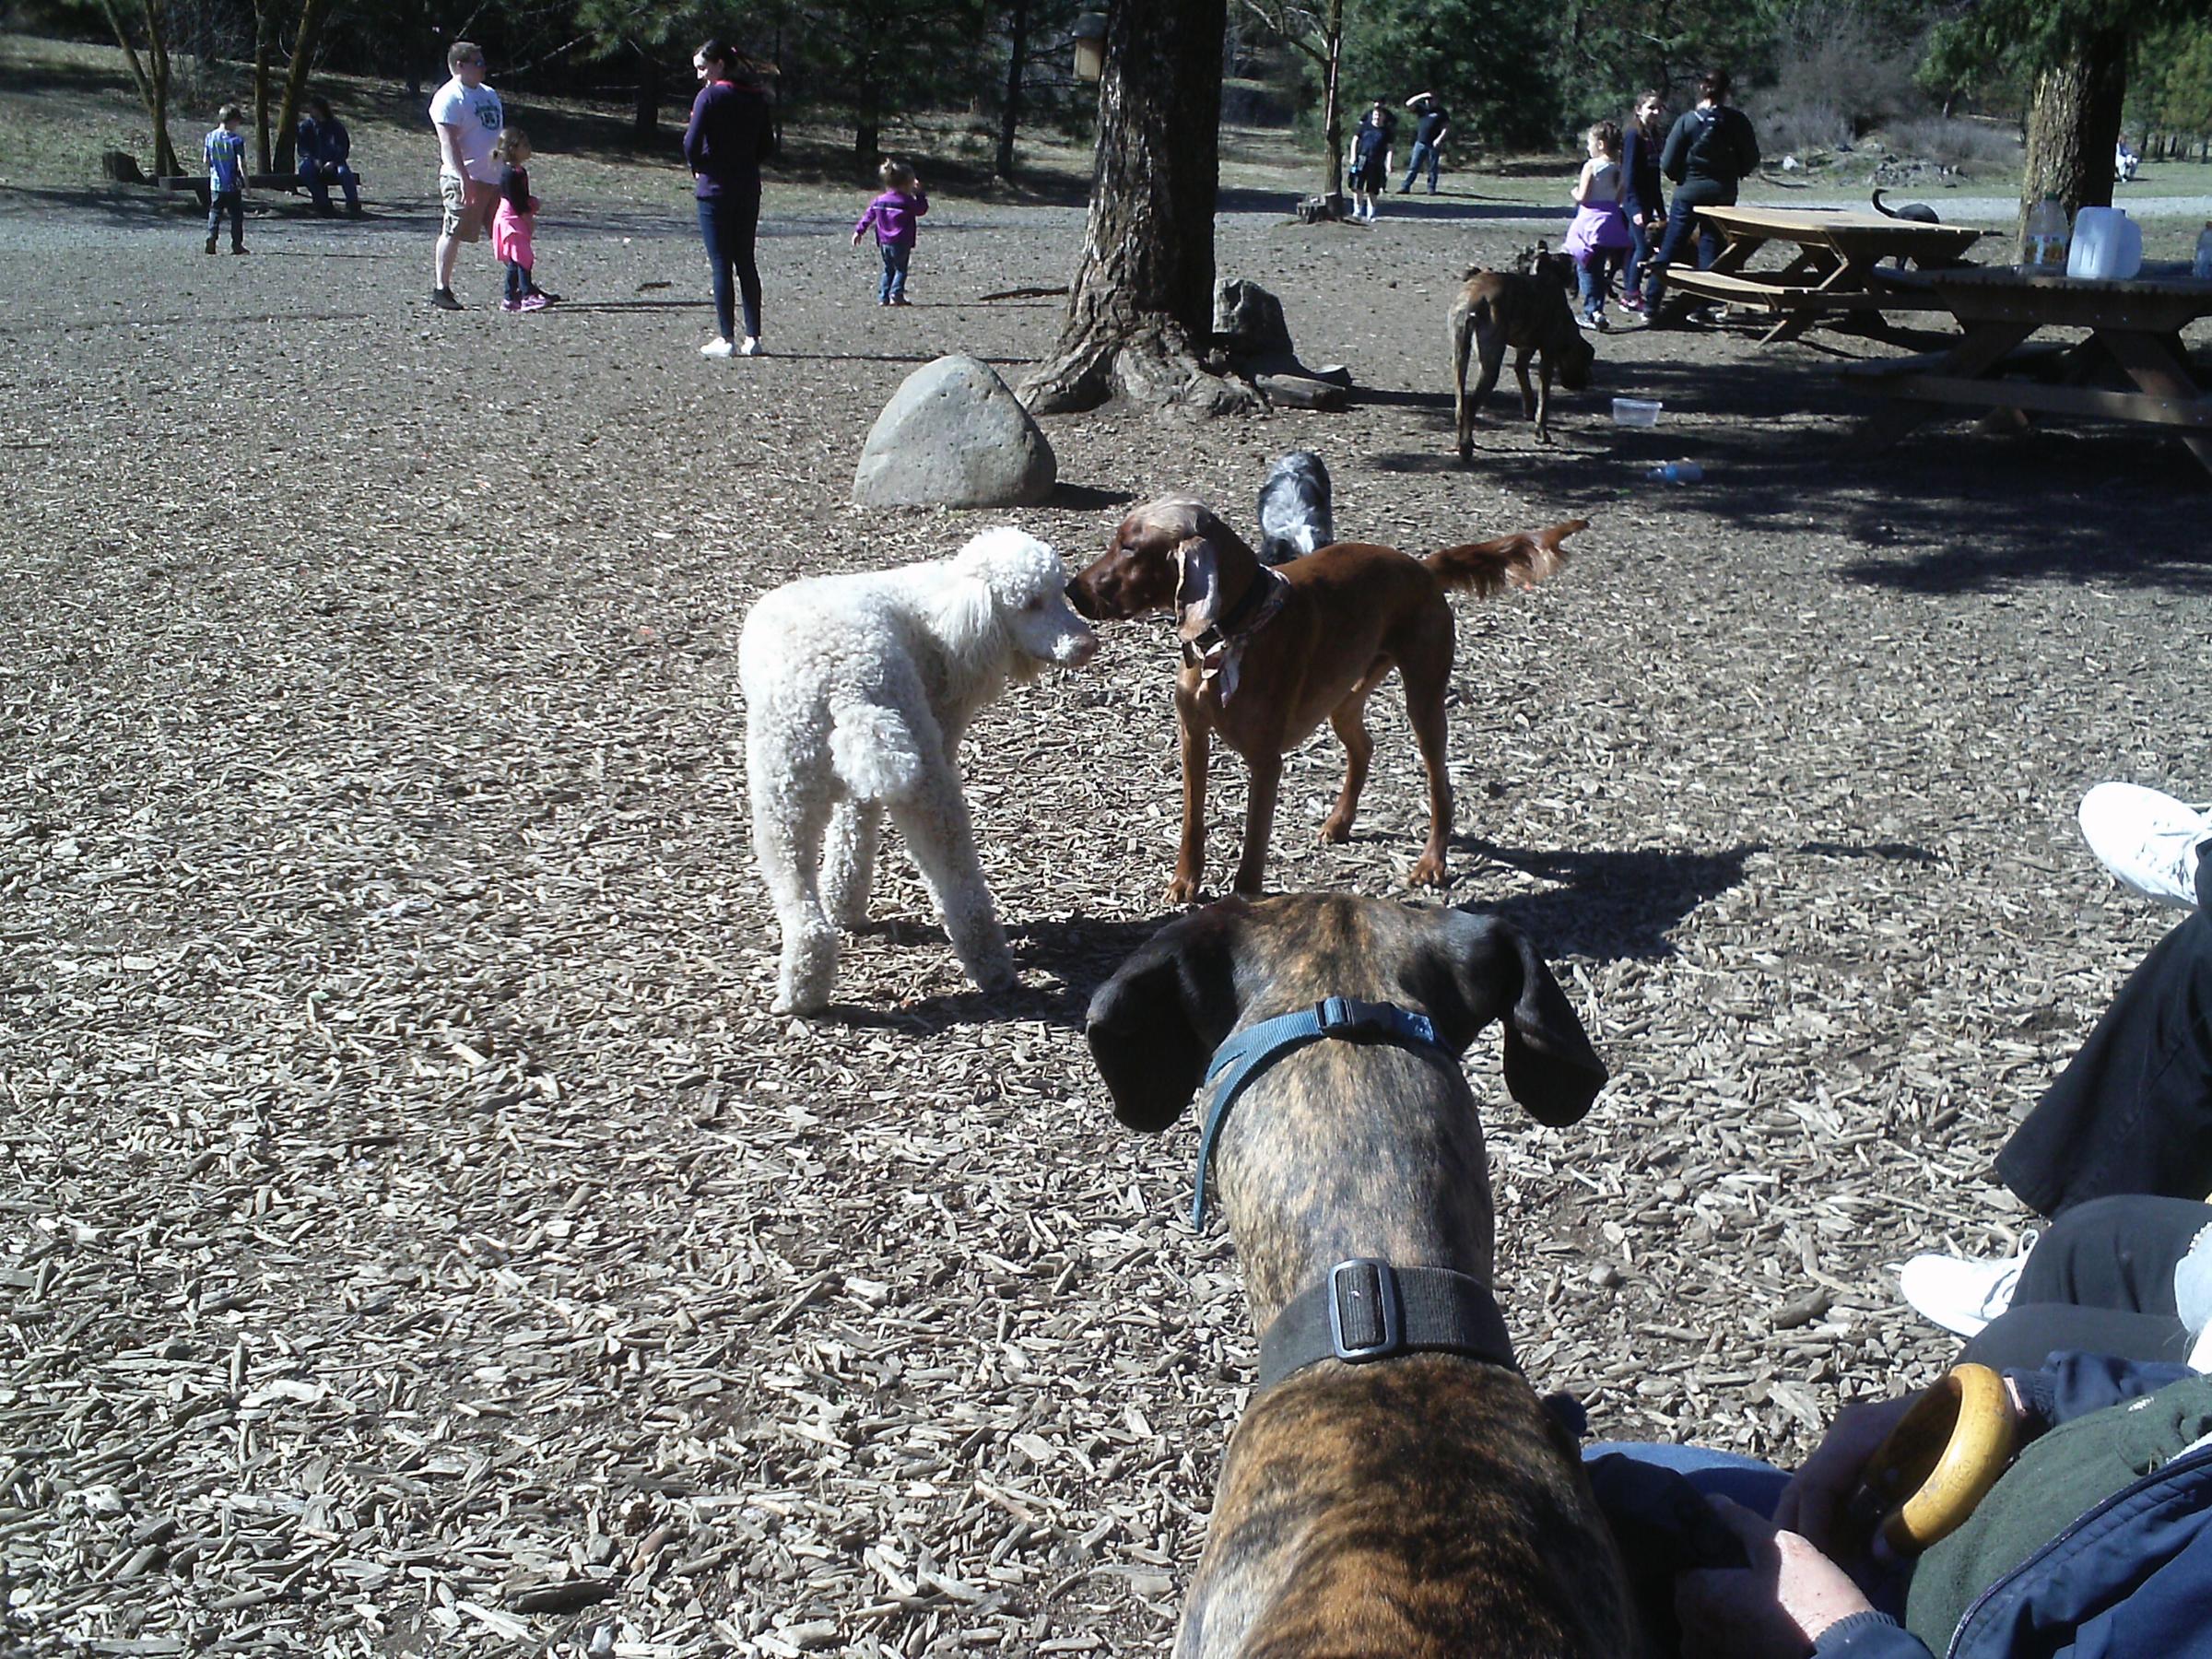 Pet Friendly SpokAnimal Dog Park at High Bridge